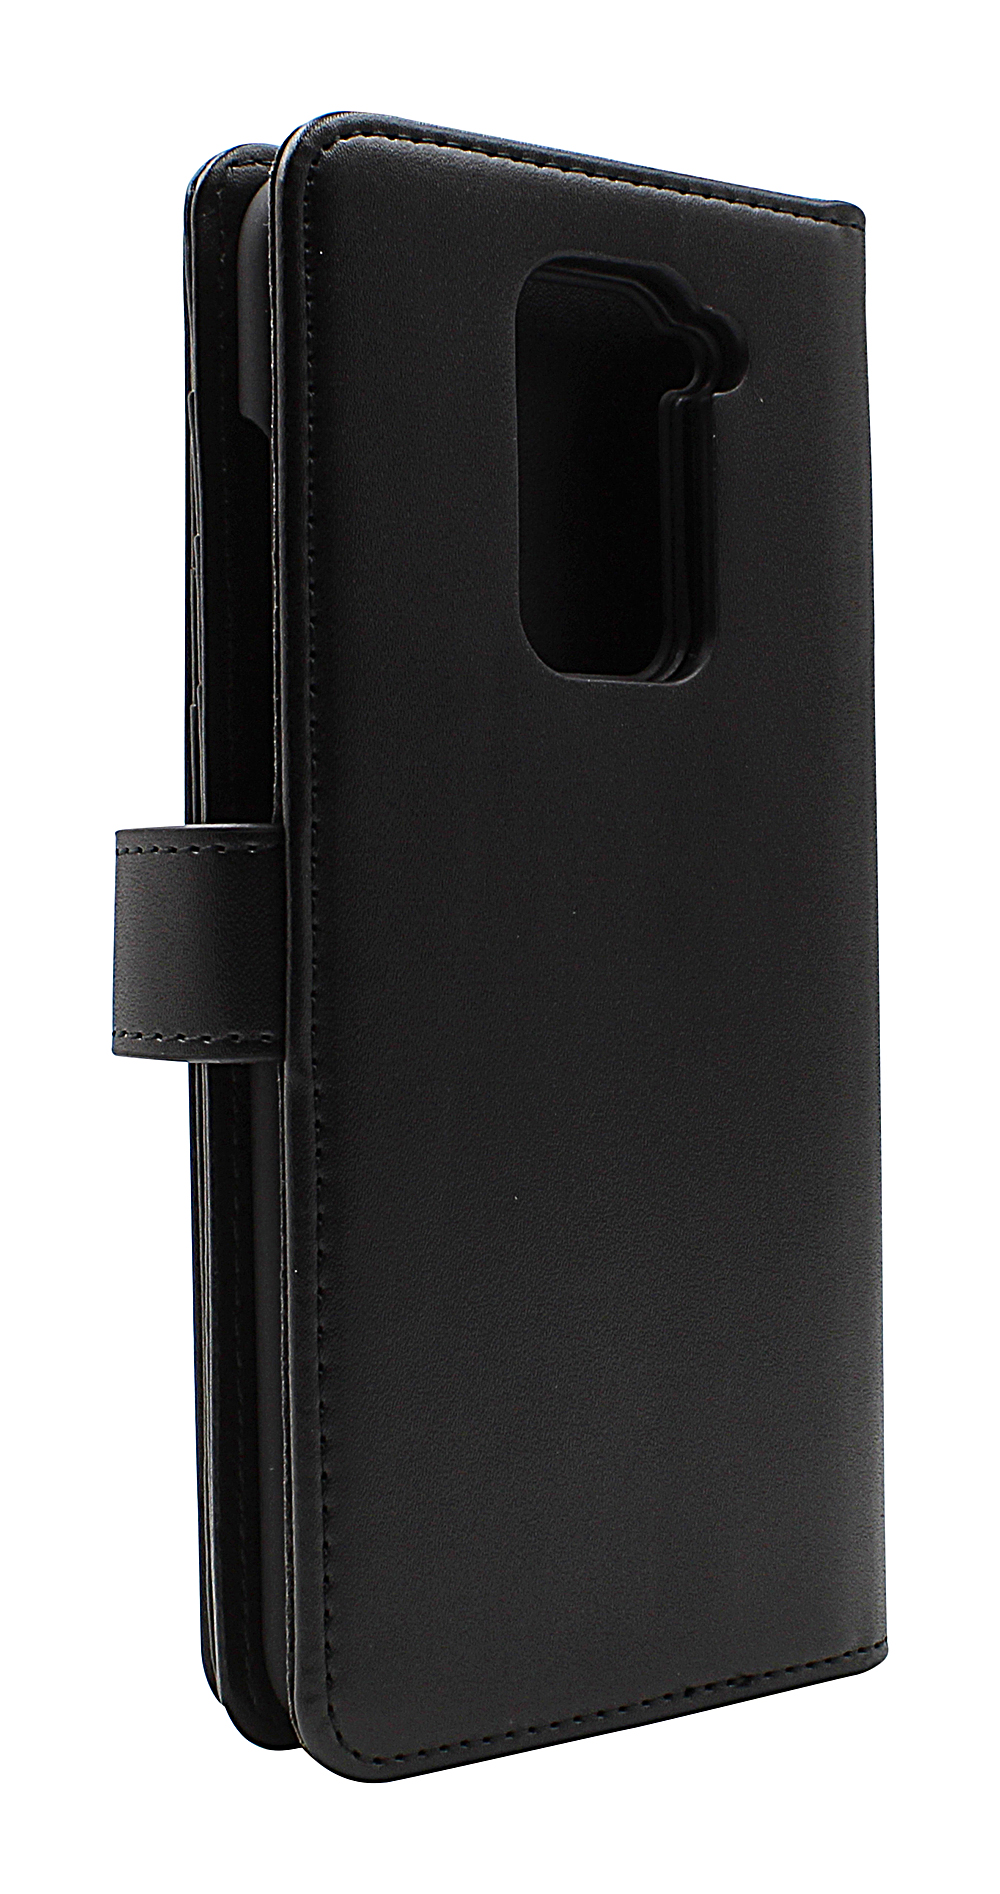 CoverInSkimblocker XL Magnet Fodral Xiaomi Redmi Note 9